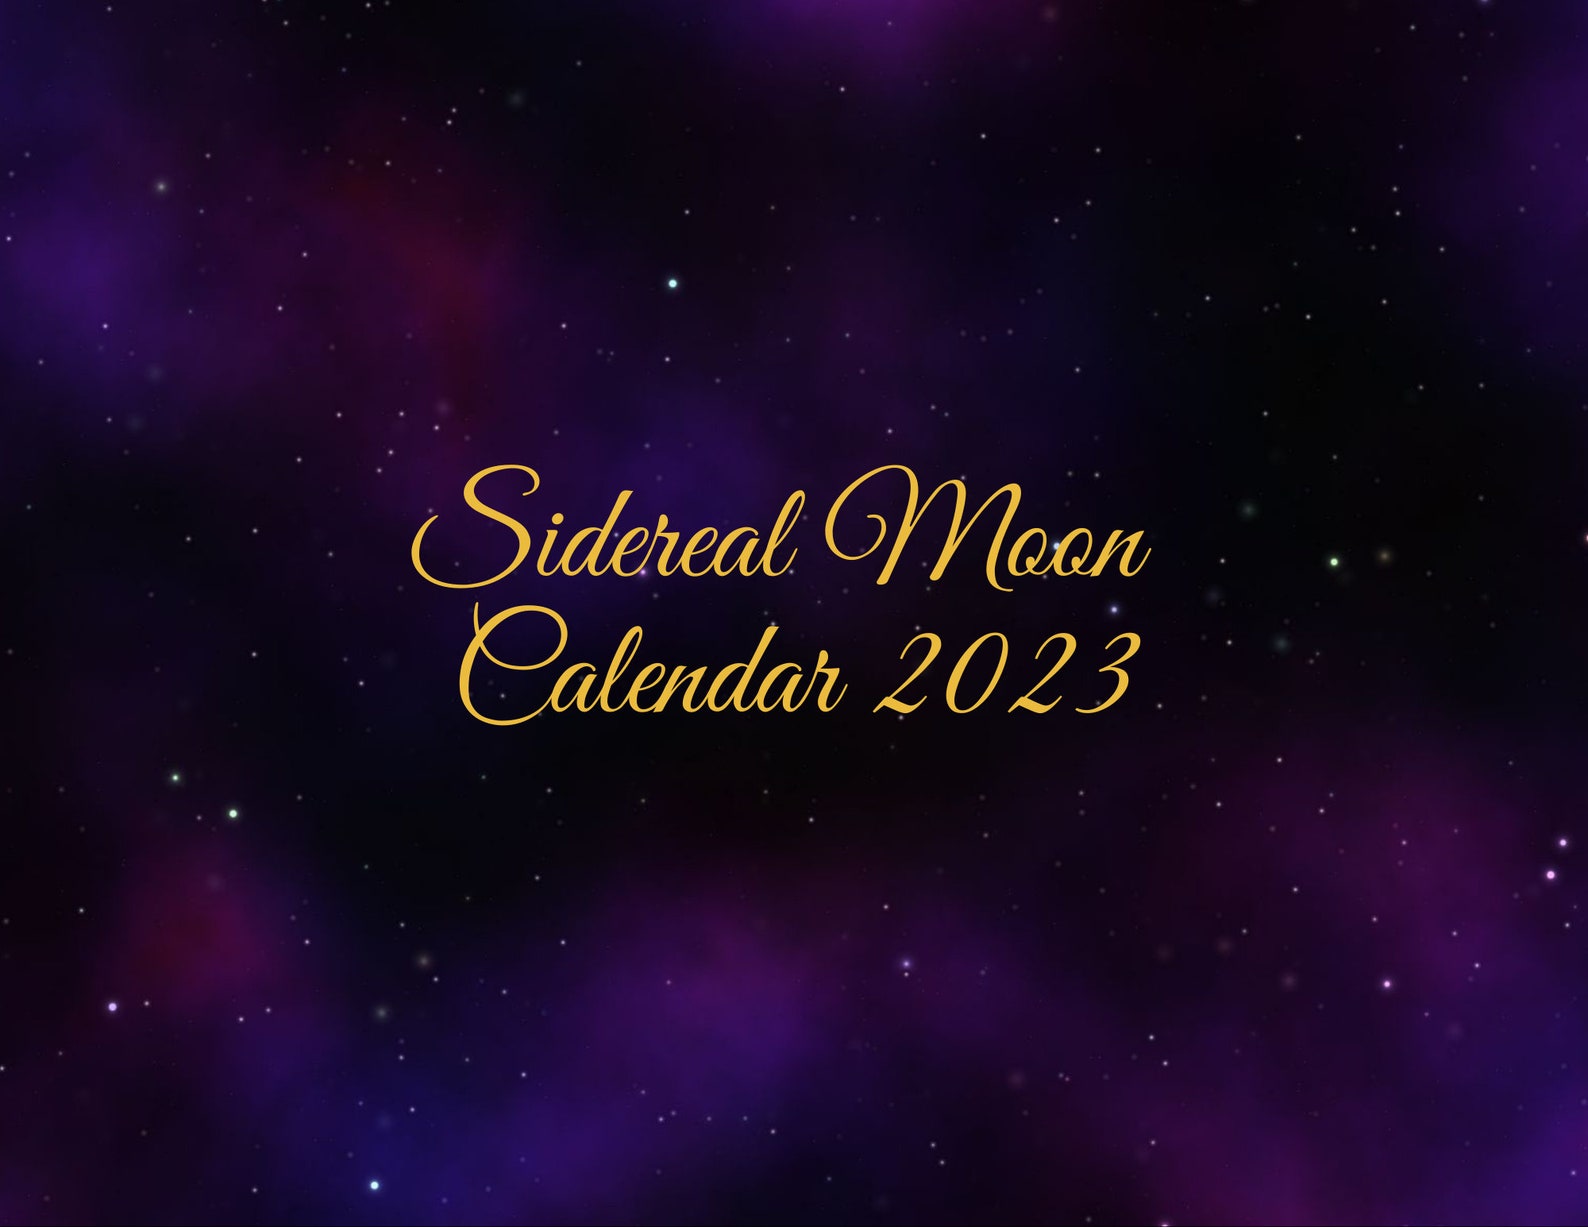 Sidereal/vedic Moon Calendar 2023 EST Etsy Australia